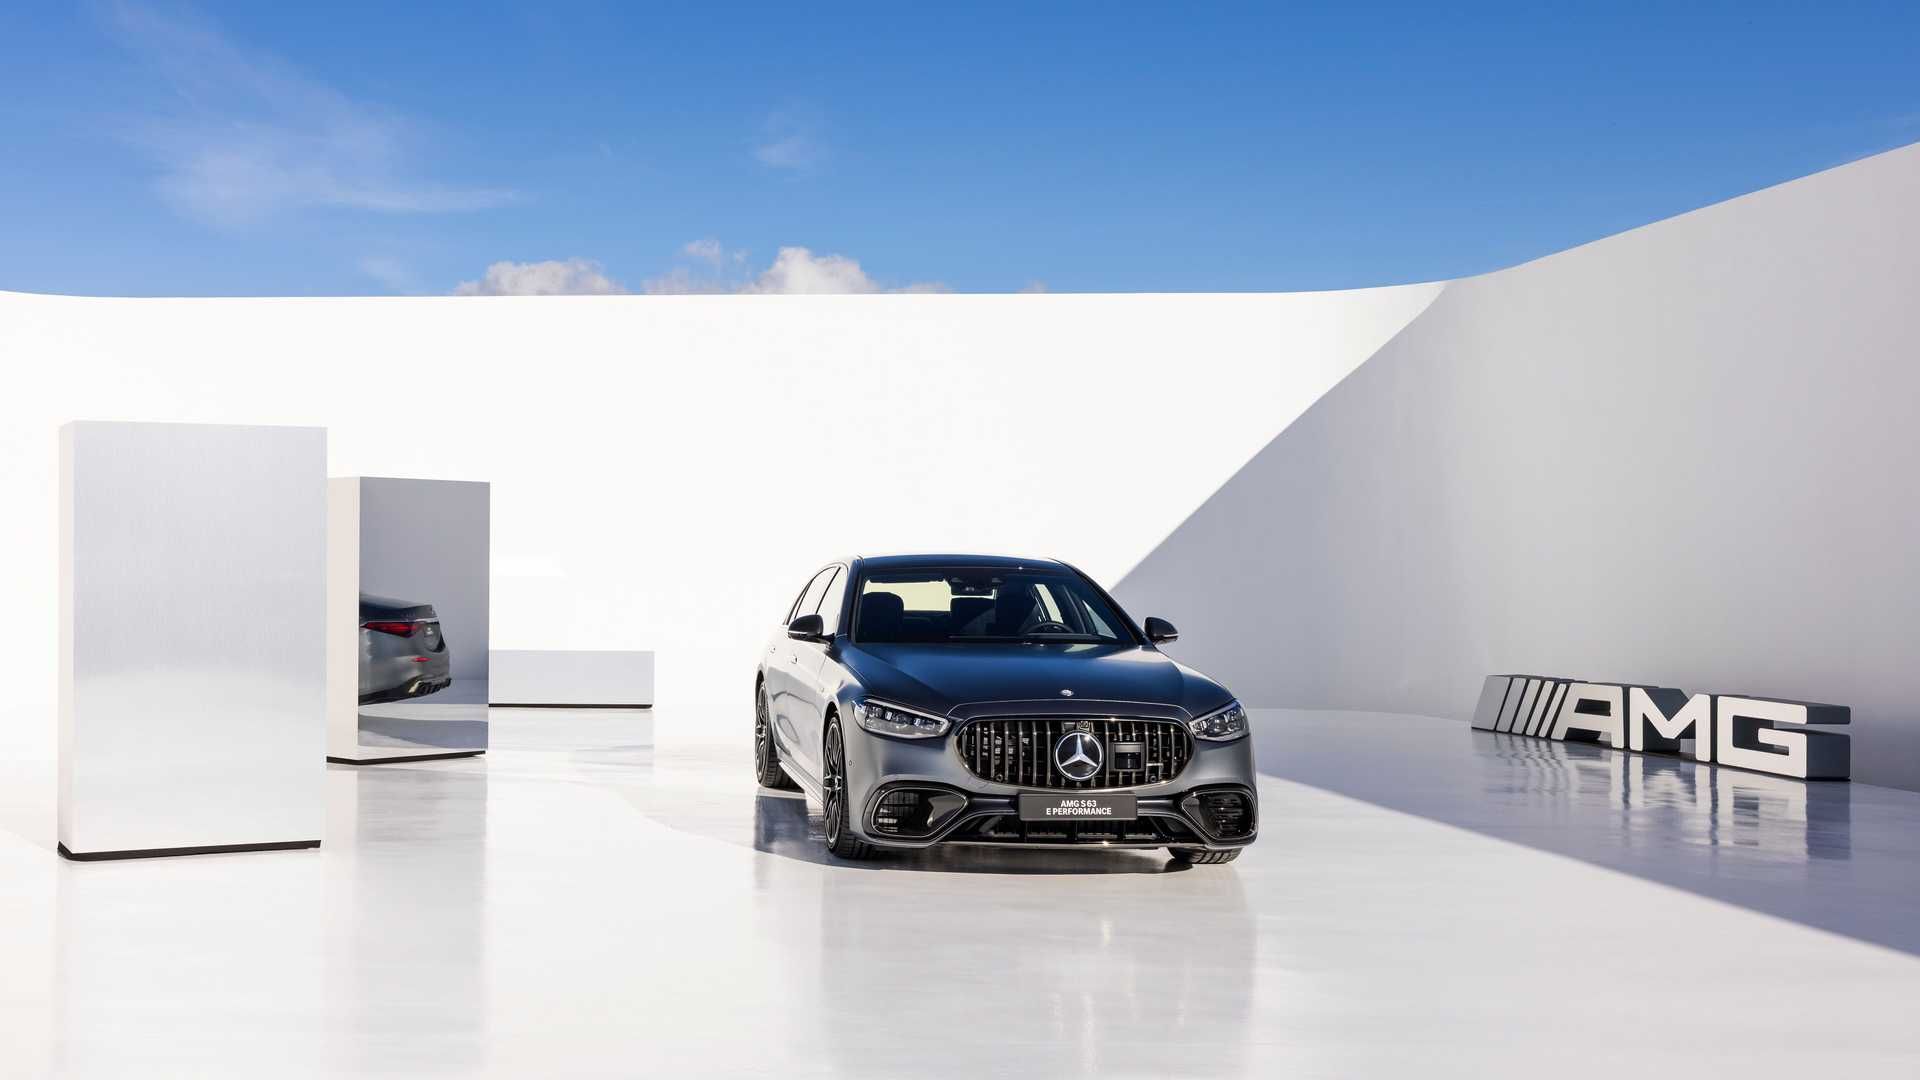 2023 Mercedes-AMG S63 Hybrid front third quarter view